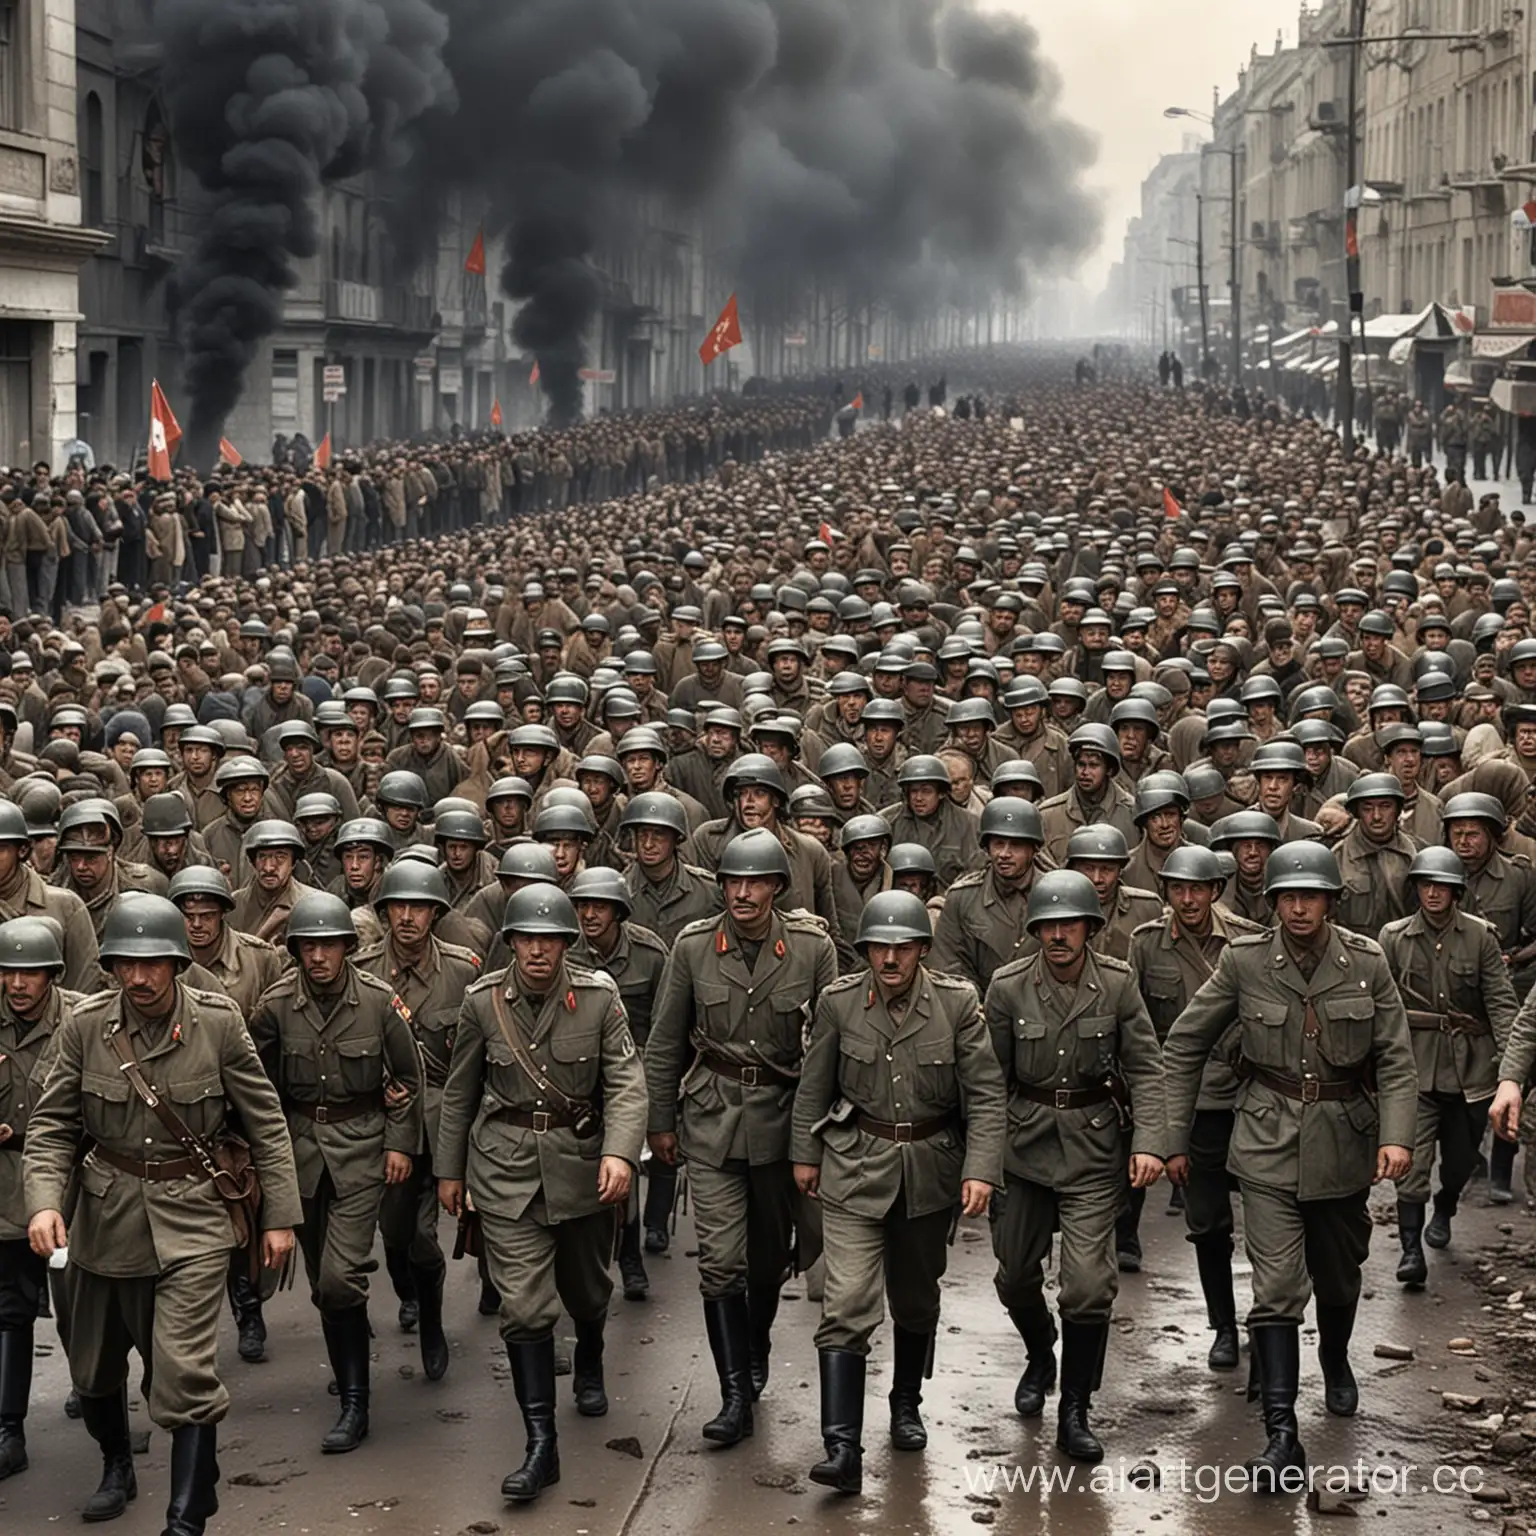 Impact-of-Military-Communism-Social-Unrest-and-Civil-Liberties-Loss